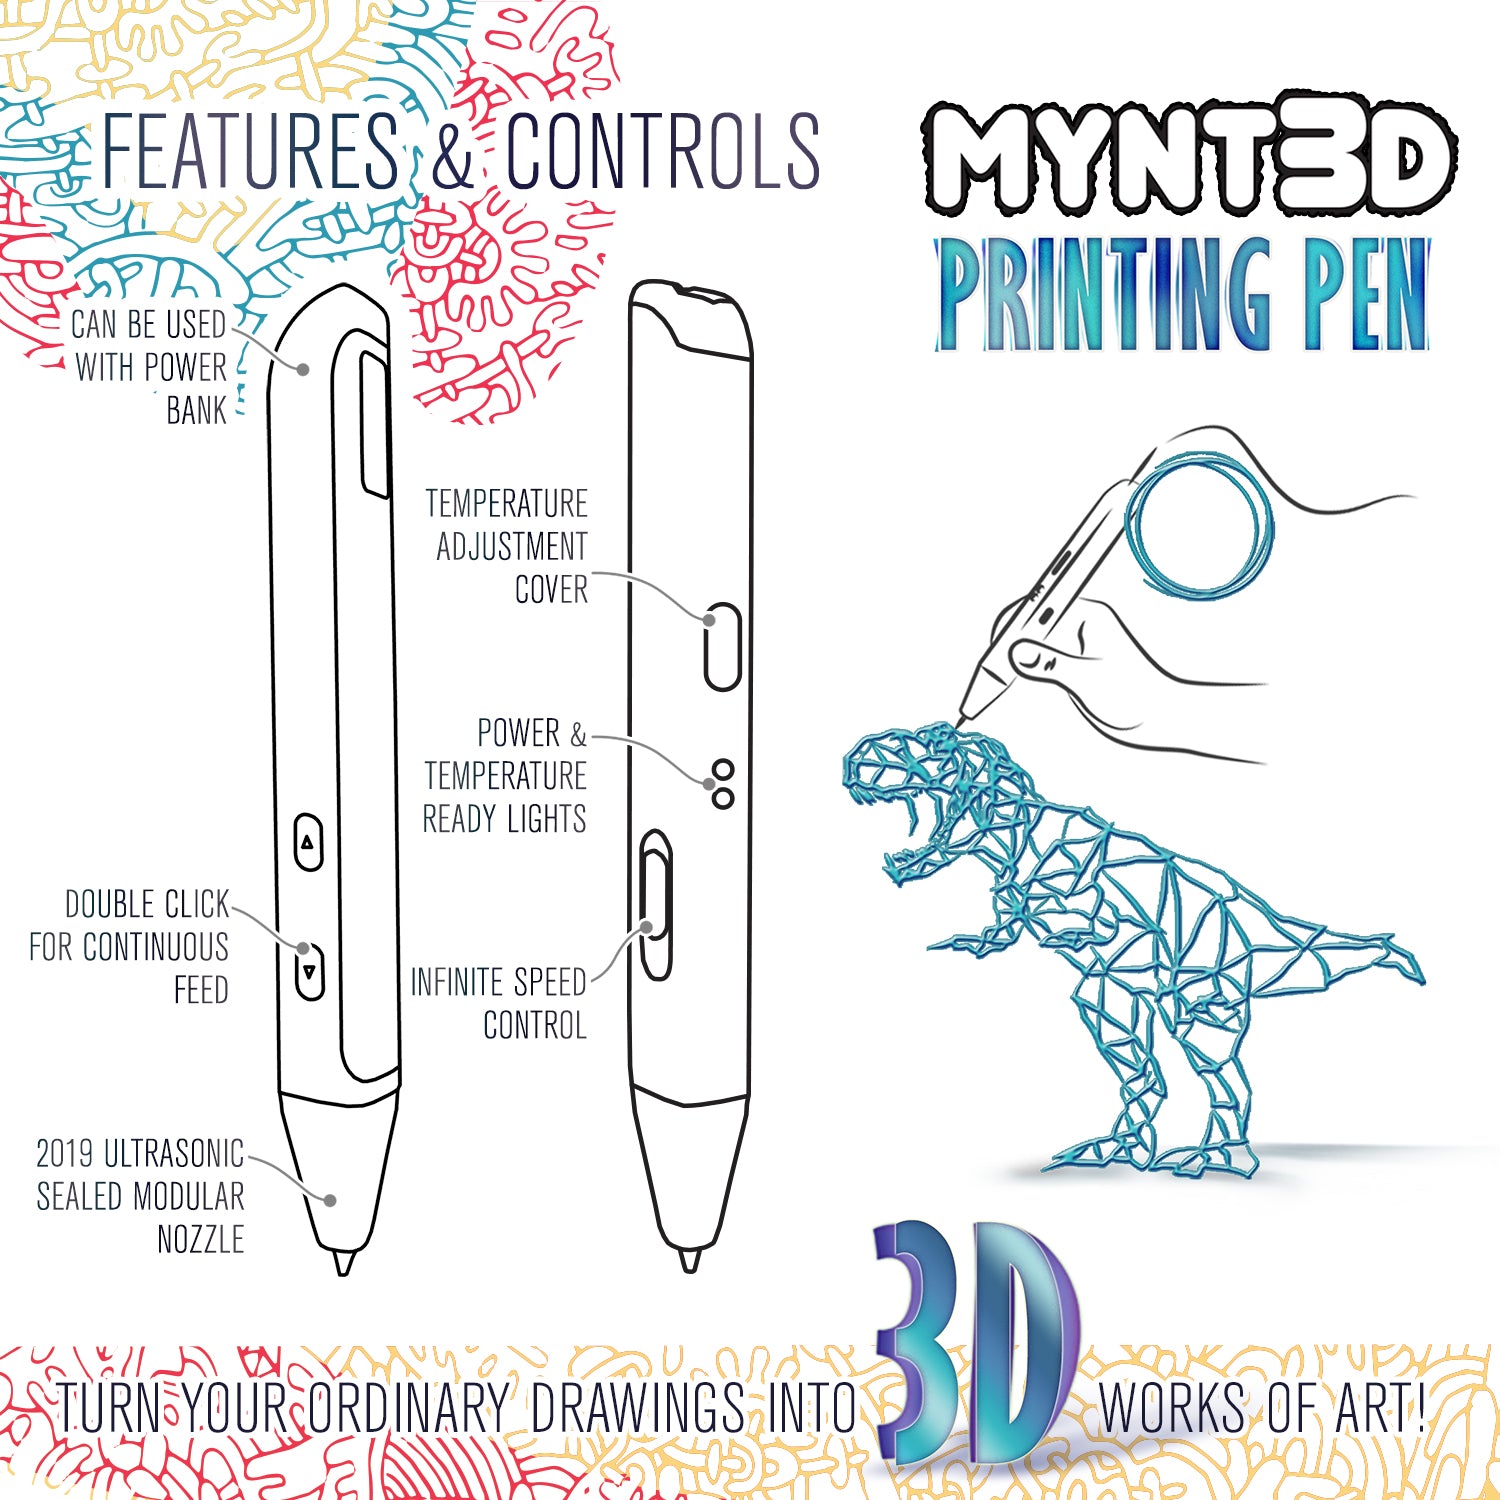 MYNT3D Paquete de bolígrafo 3D Pro + ABS de 10 colores + kit de alfombrilla  DesignPad